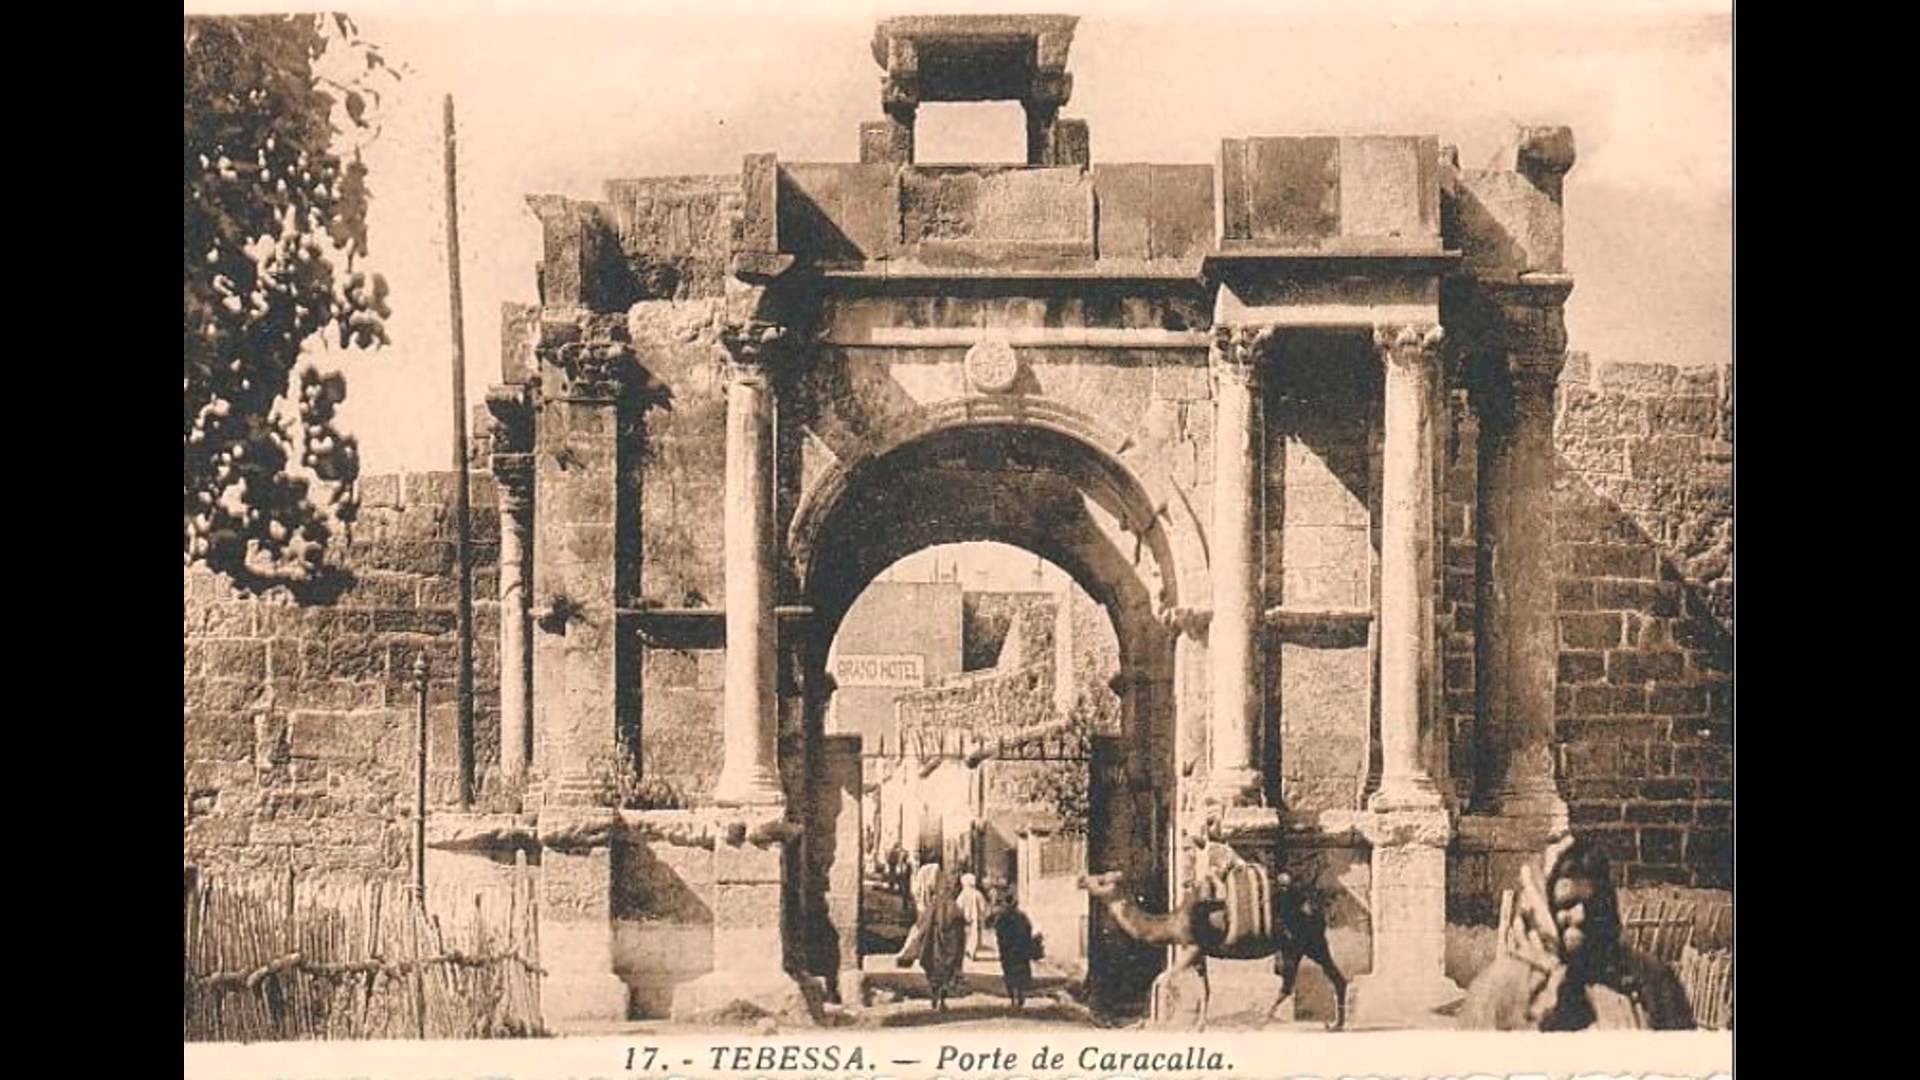  Arch of Caracalla